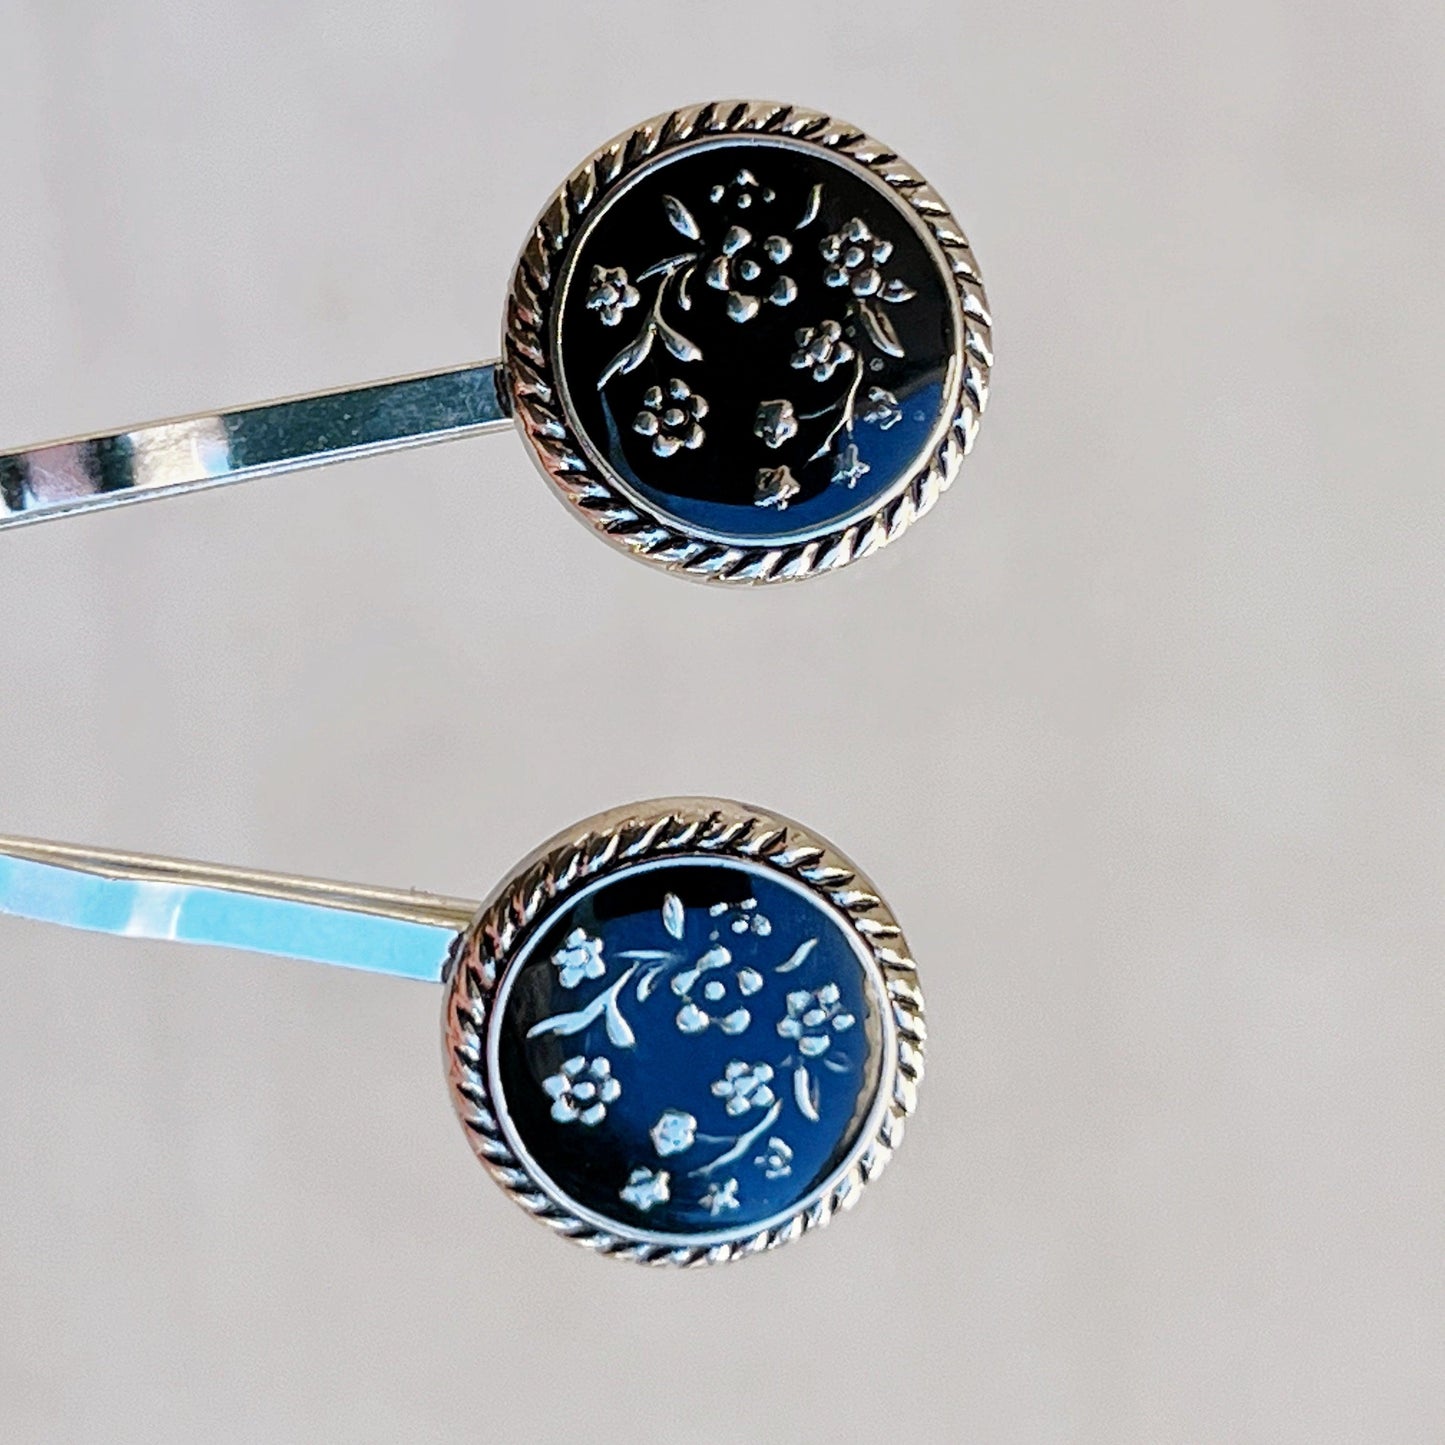 Black & Antiqued Silver Wildflower Hair Pins - Elegant and Versatile Hair Accessories